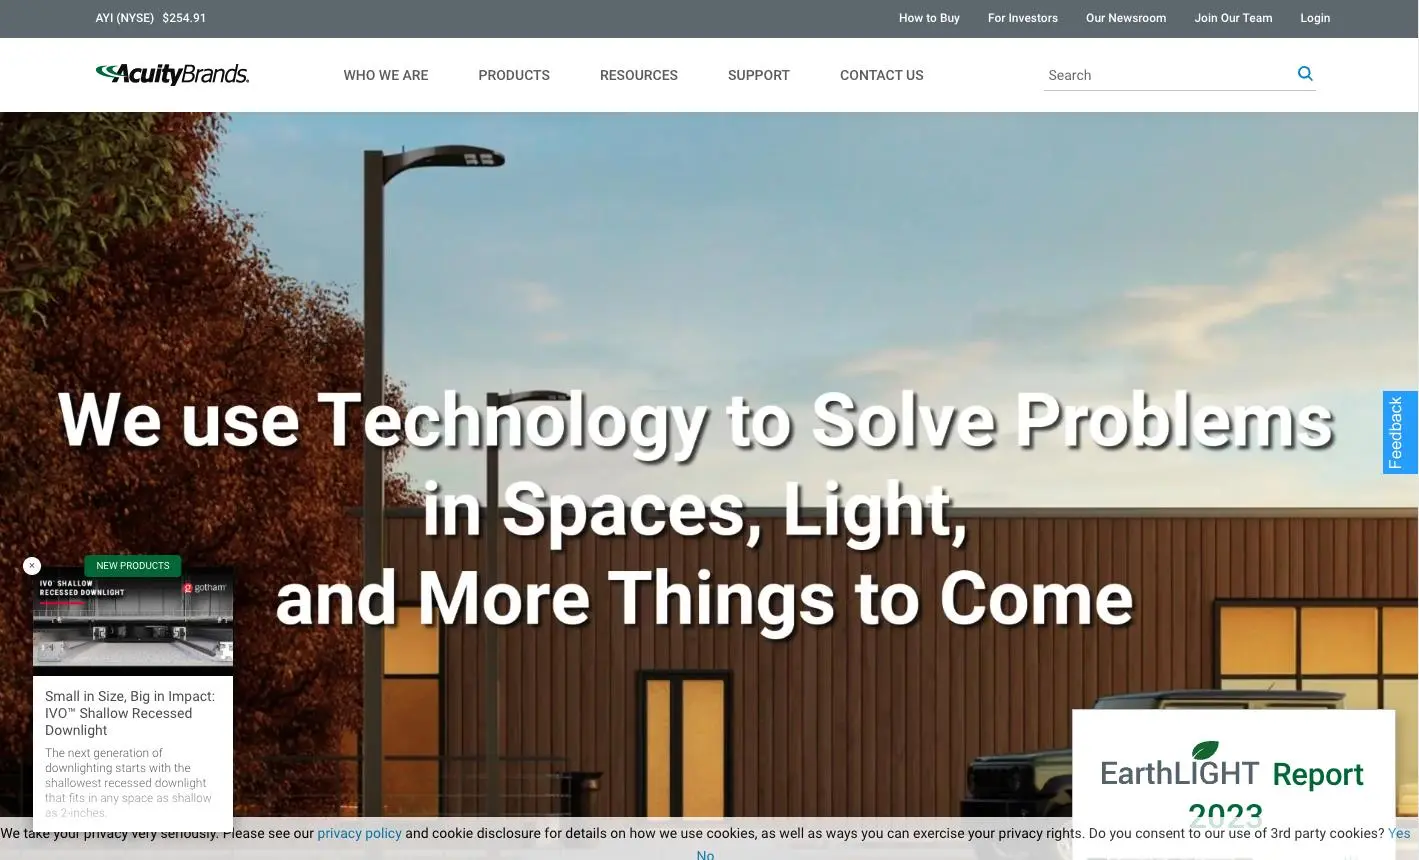 Beleuchtungs-Website der Marke Acuity